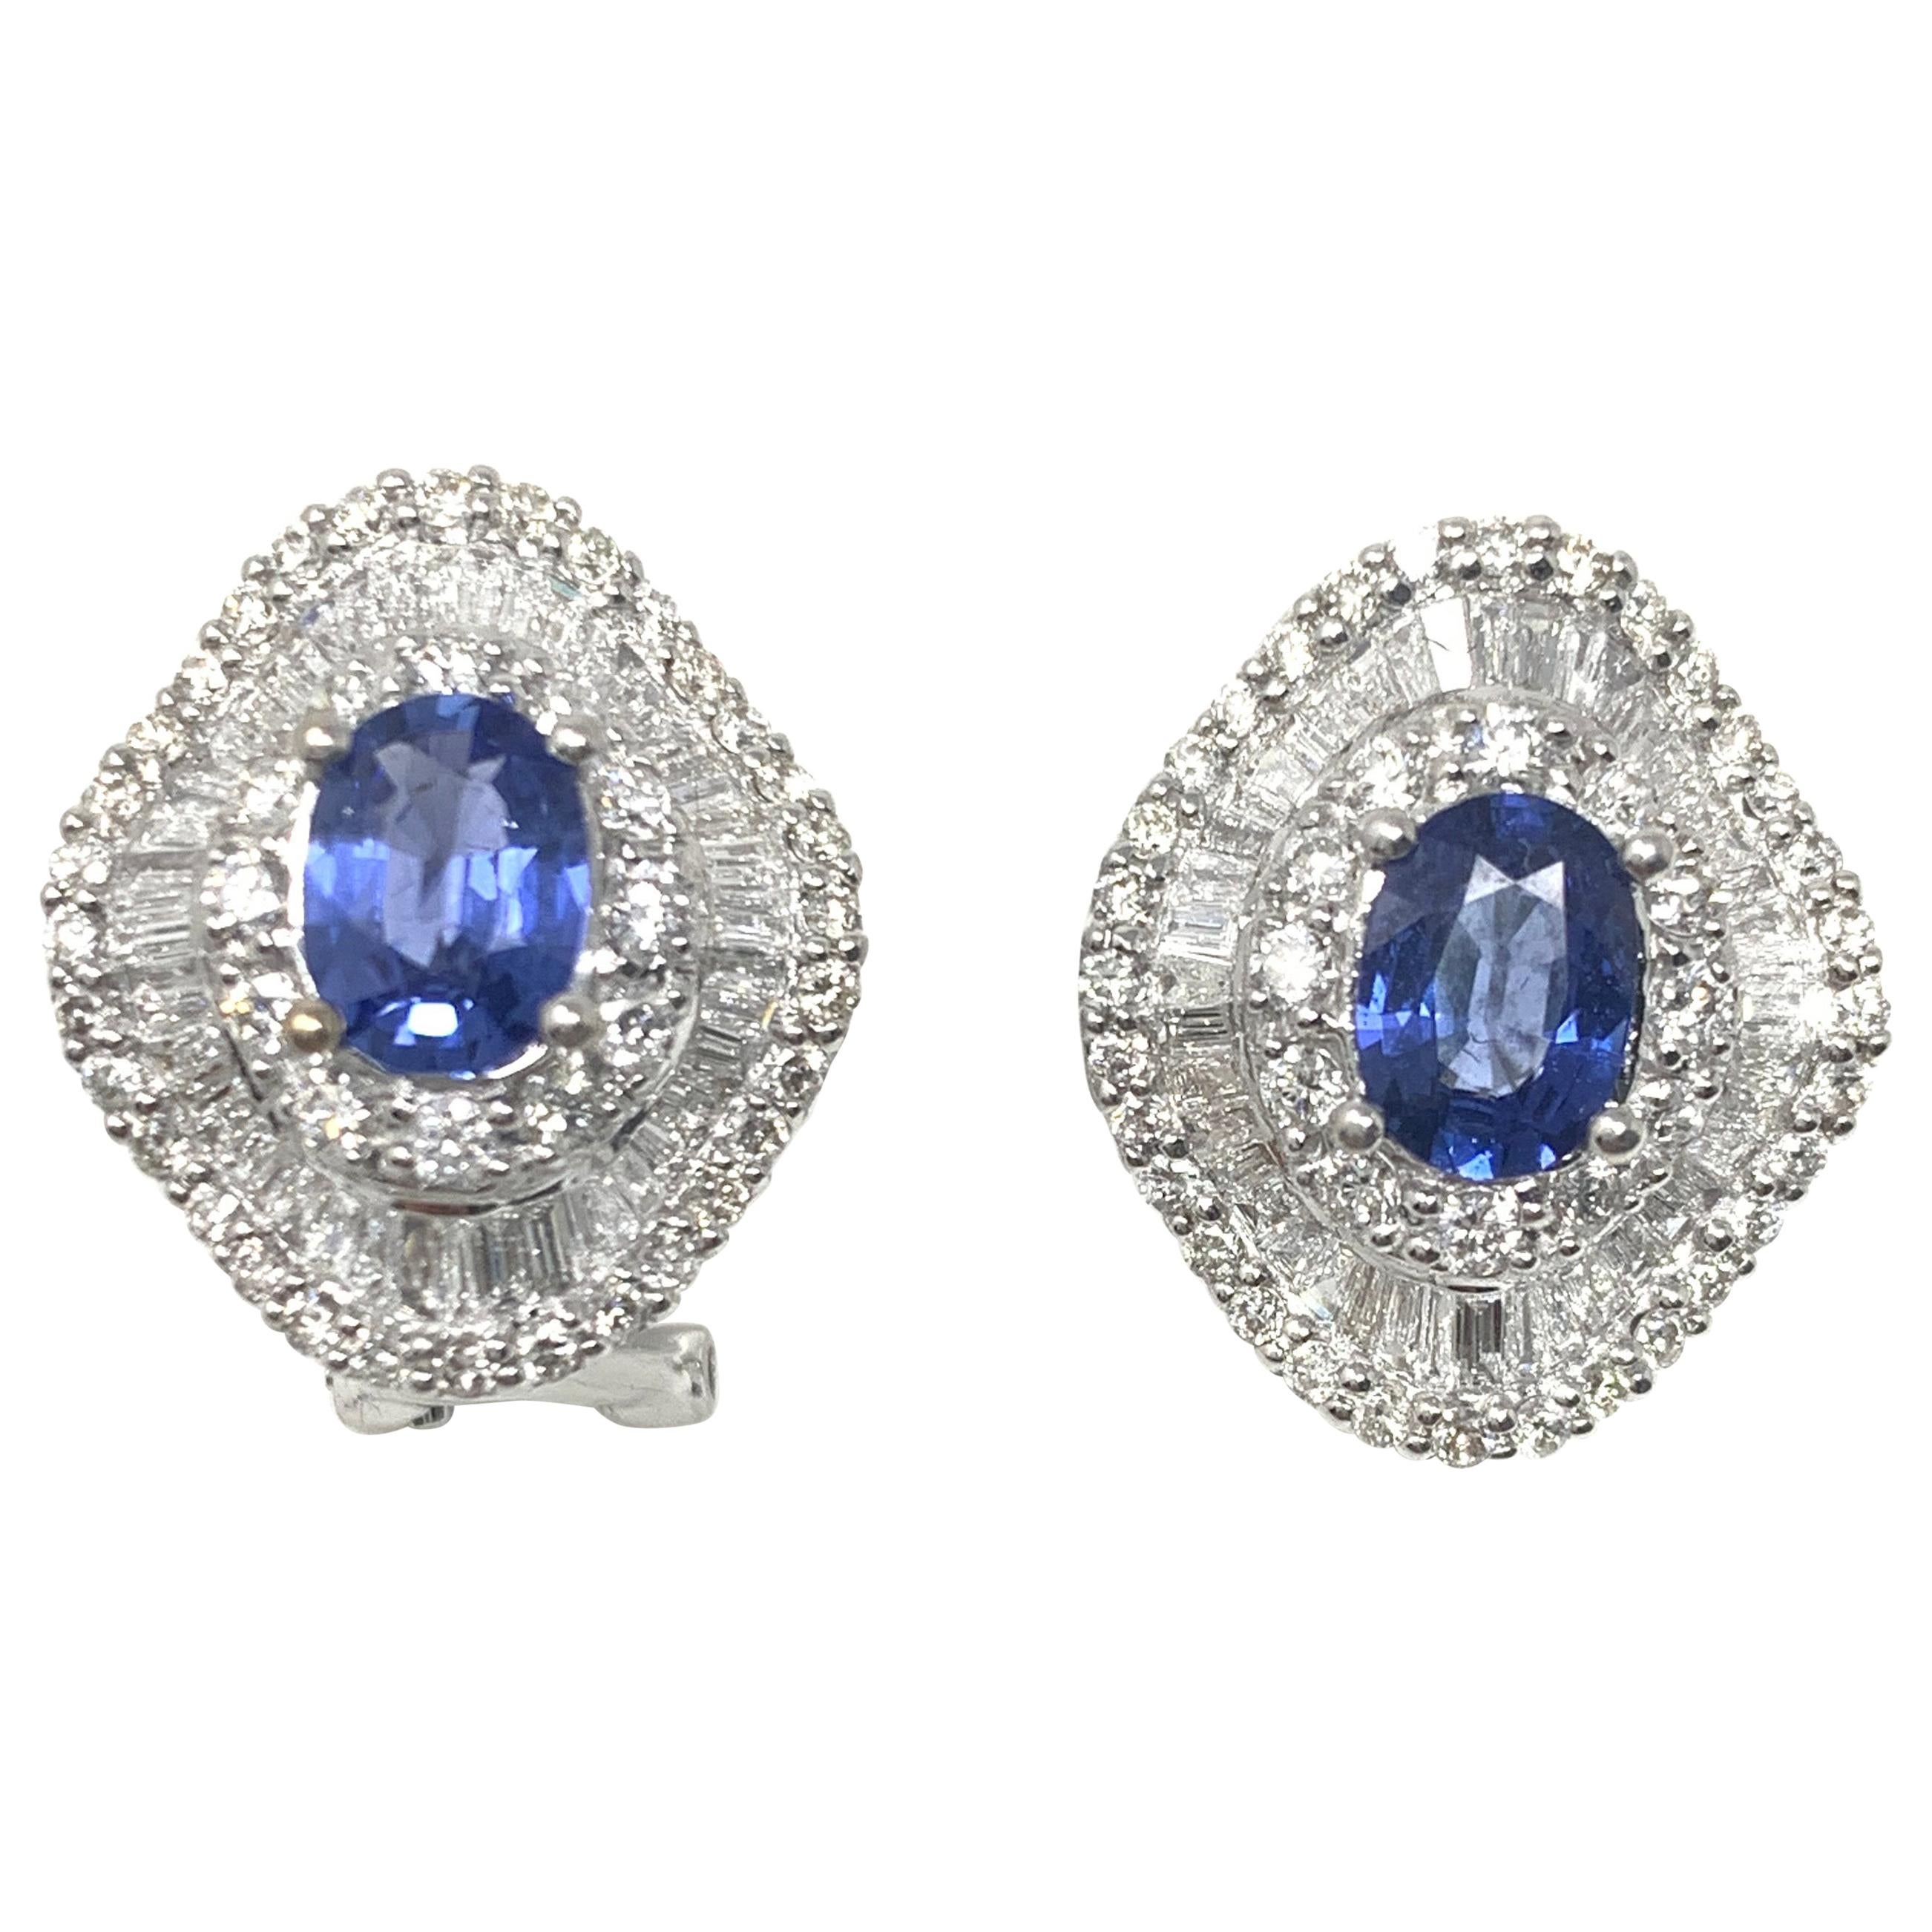 Blue Sapphire and Diamond Stud Earrings in 18 Karat White Gold